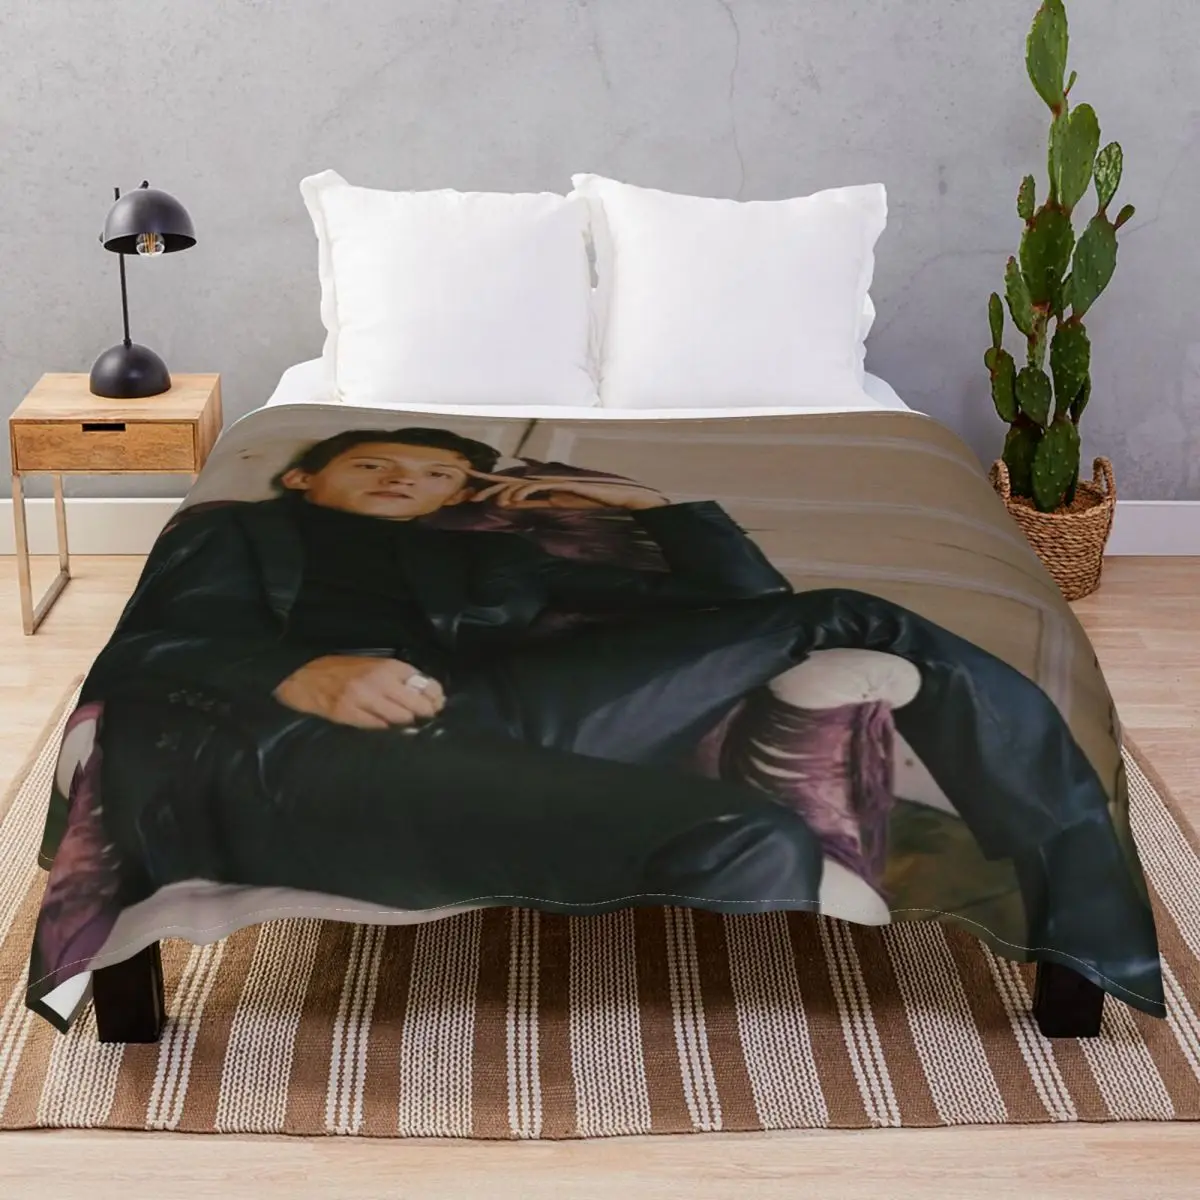 Tom Holland Blankets Coral Fleece Autumn Warm Throw Blanket for Bedding Sofa Camp Cinema